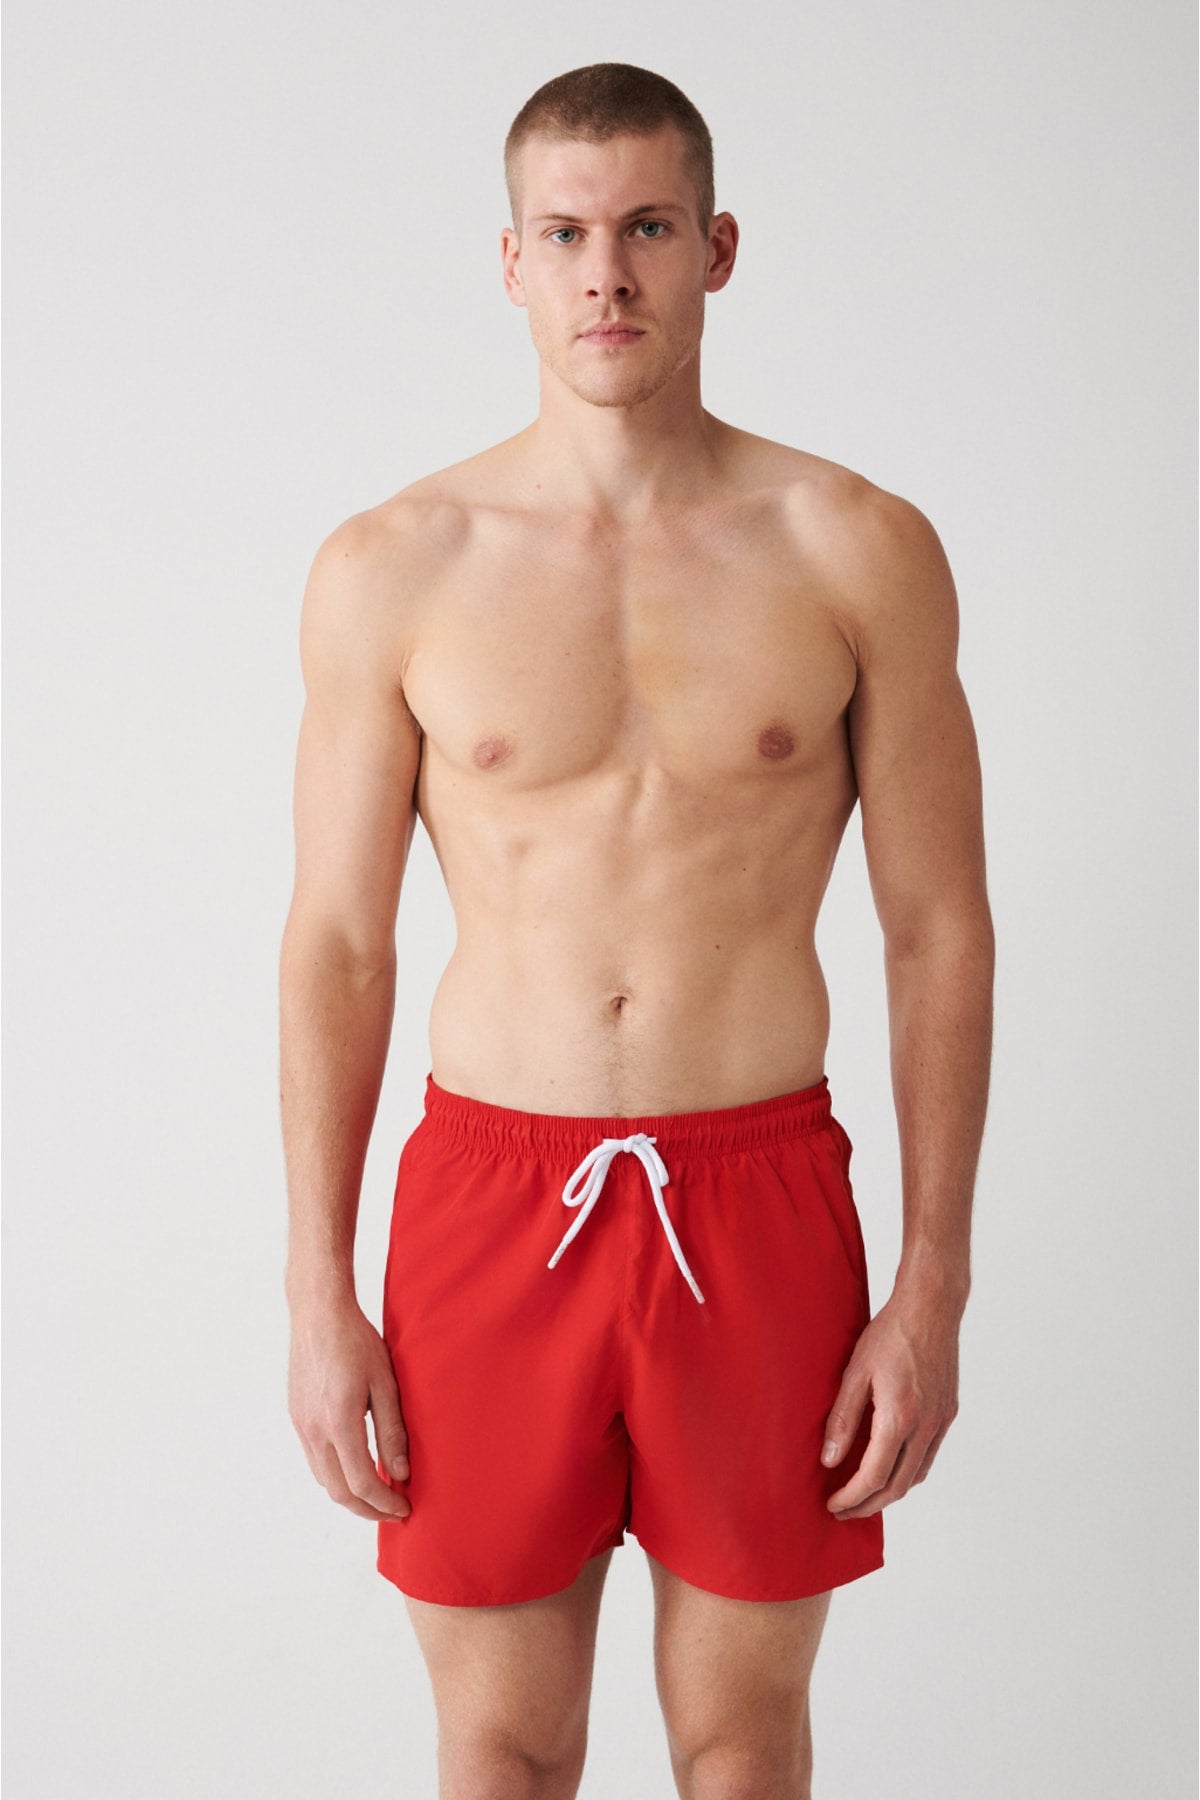 Men's Red Quick Dry Printed Standard Size Swimwear Marine Shorts E003802